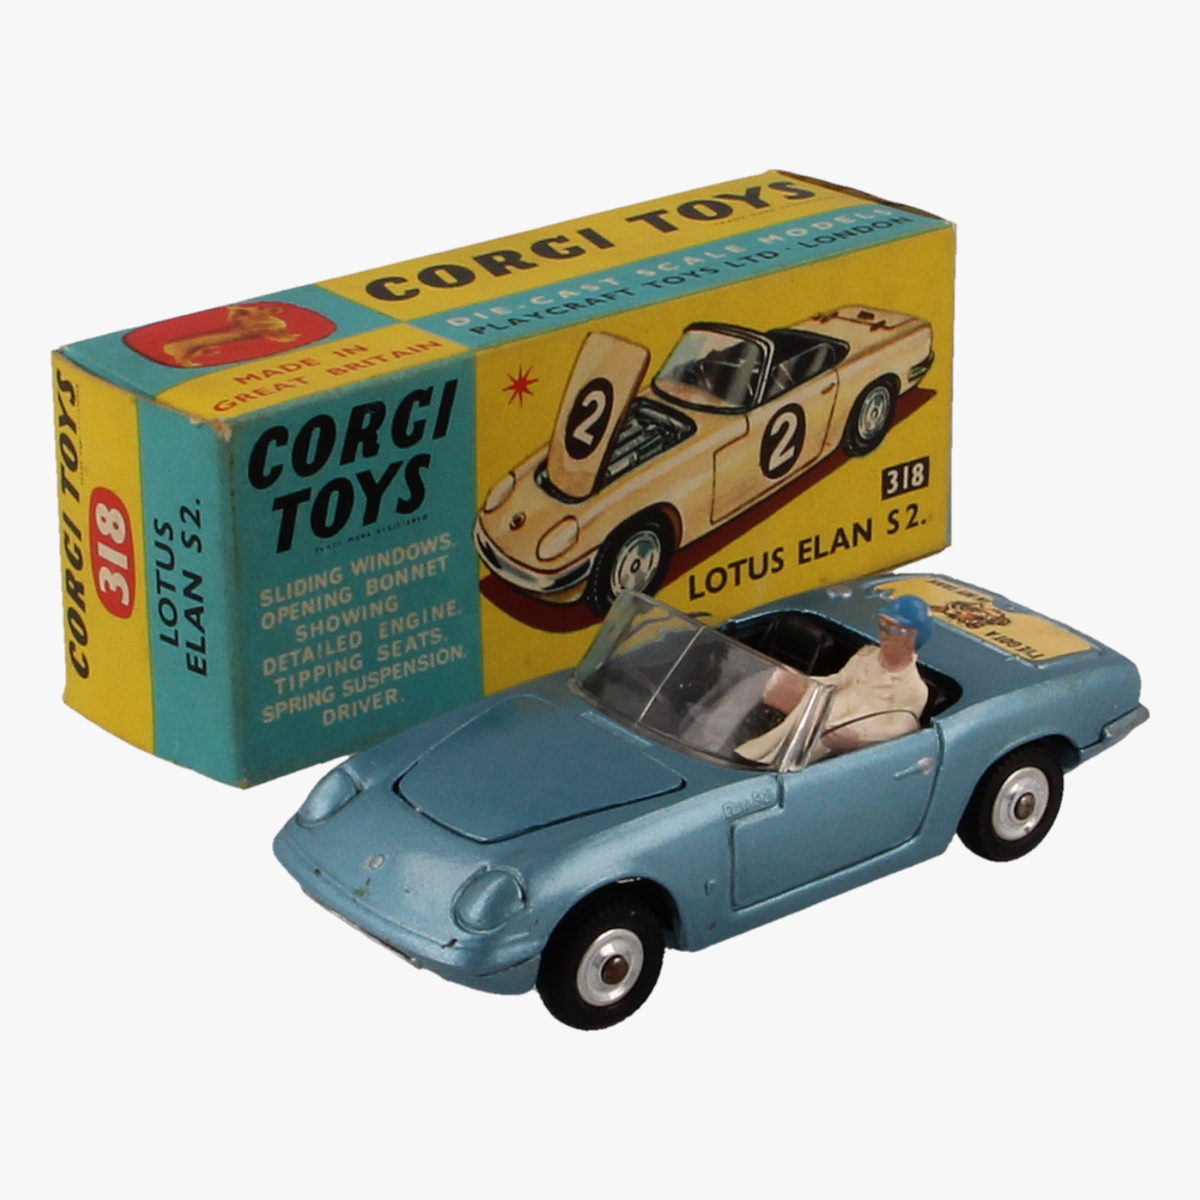 Afbeeldingen van Corgi Toys. Lotus Elan S2. Nr. 318